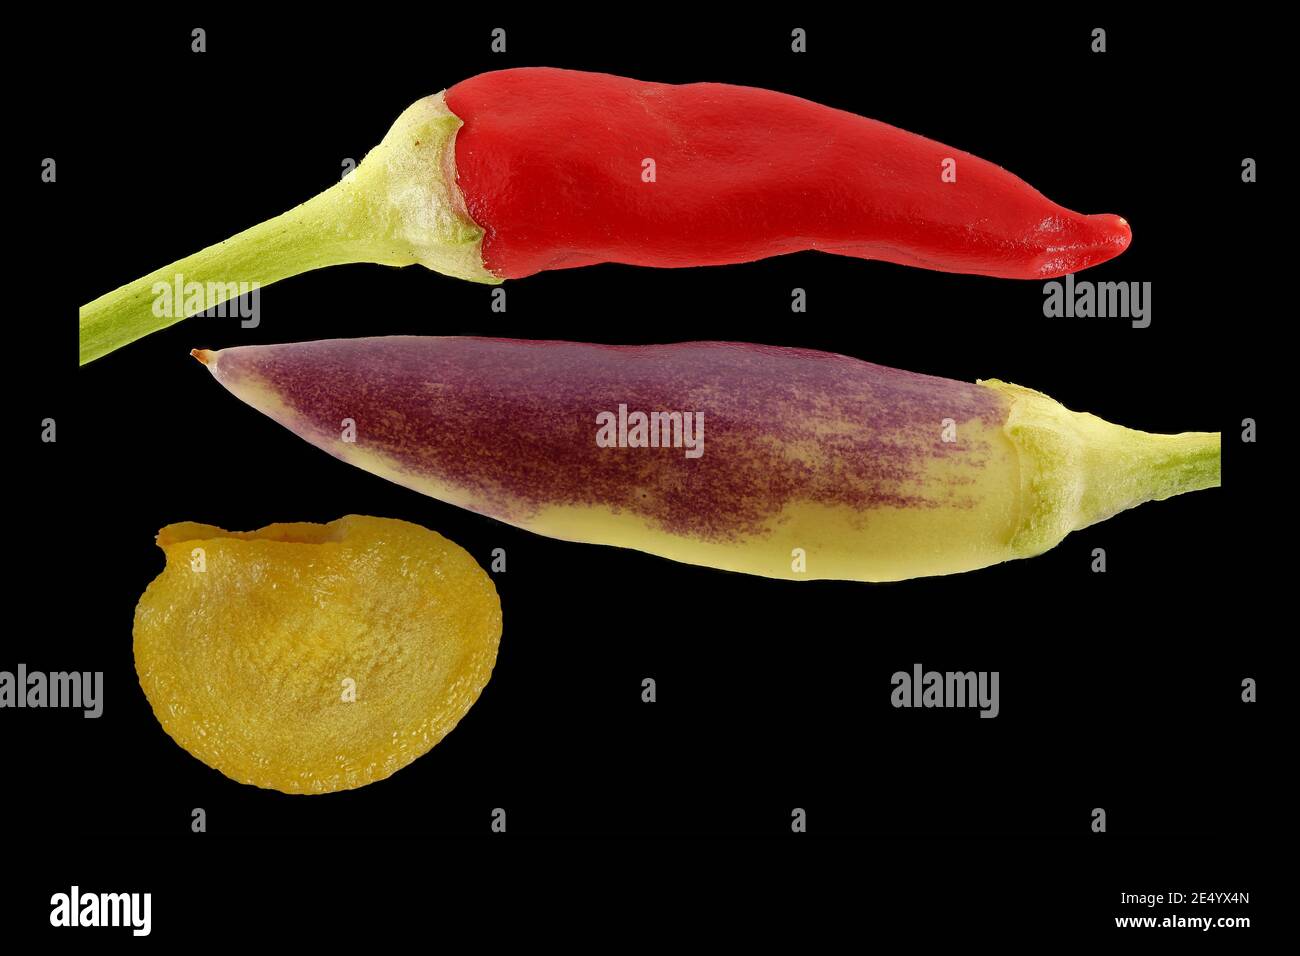 Capsicum annuum, Chili pepper, Spanischer Pfeffer, close up, fruits and seed Stock Photo